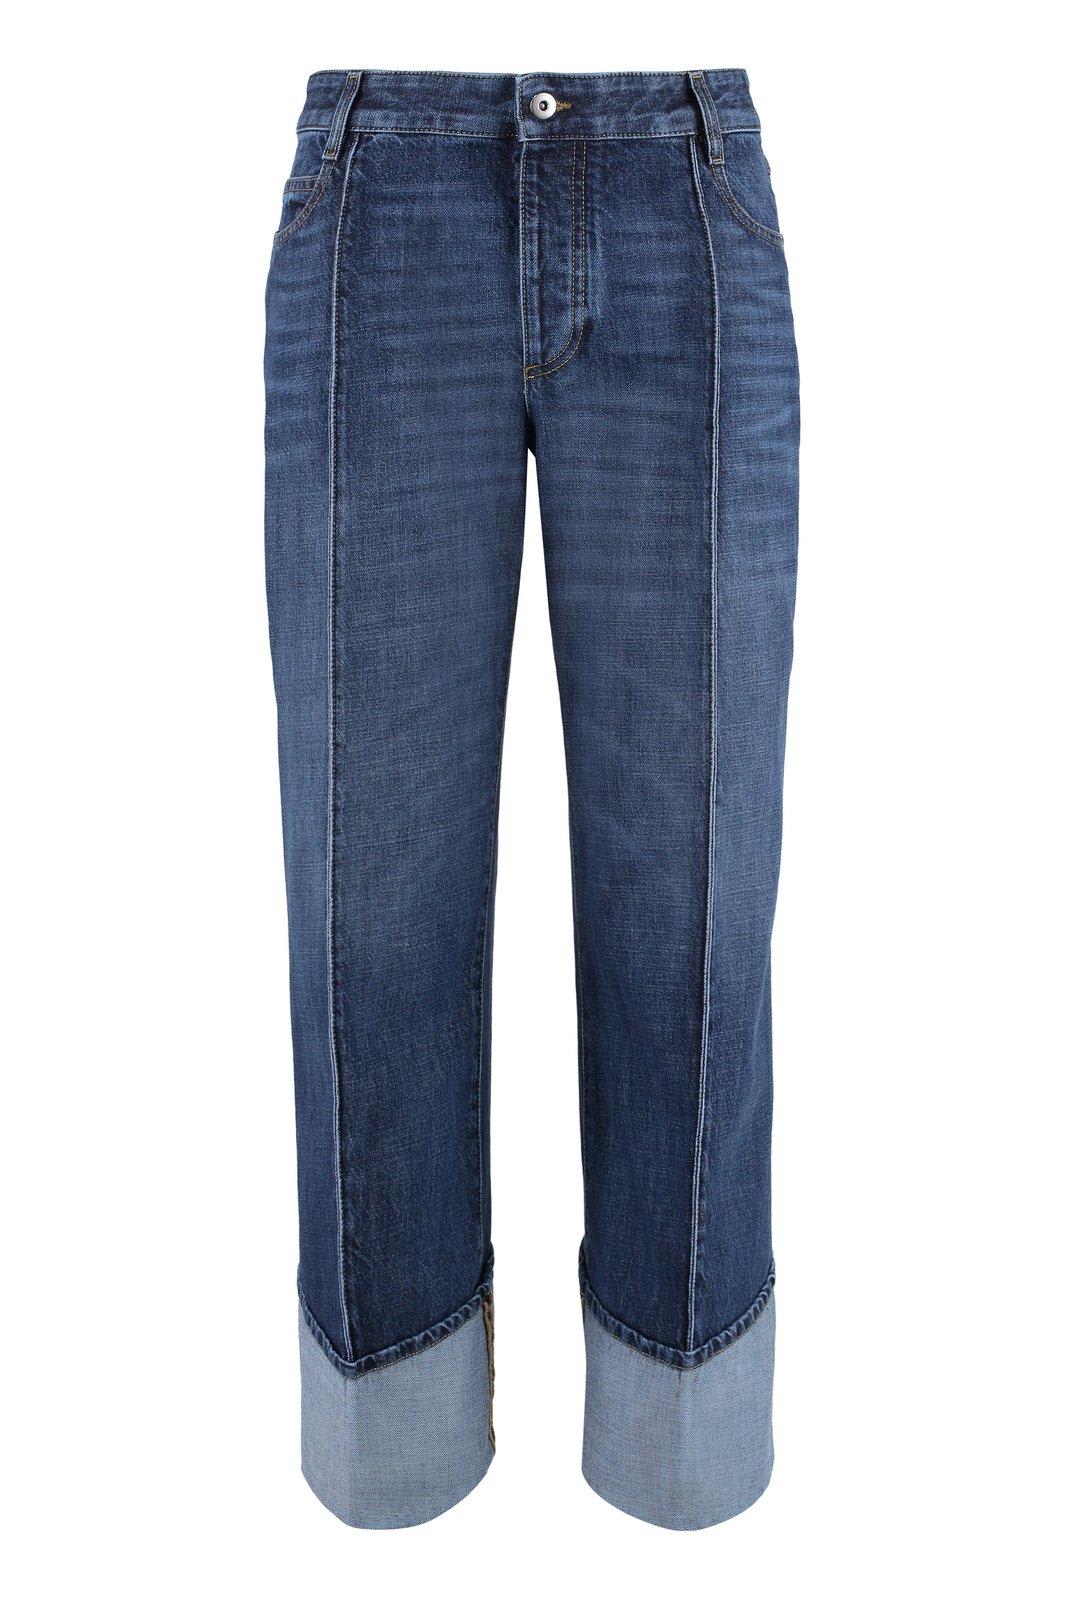 Bottega Veneta Regular Fit Cropped Jeans